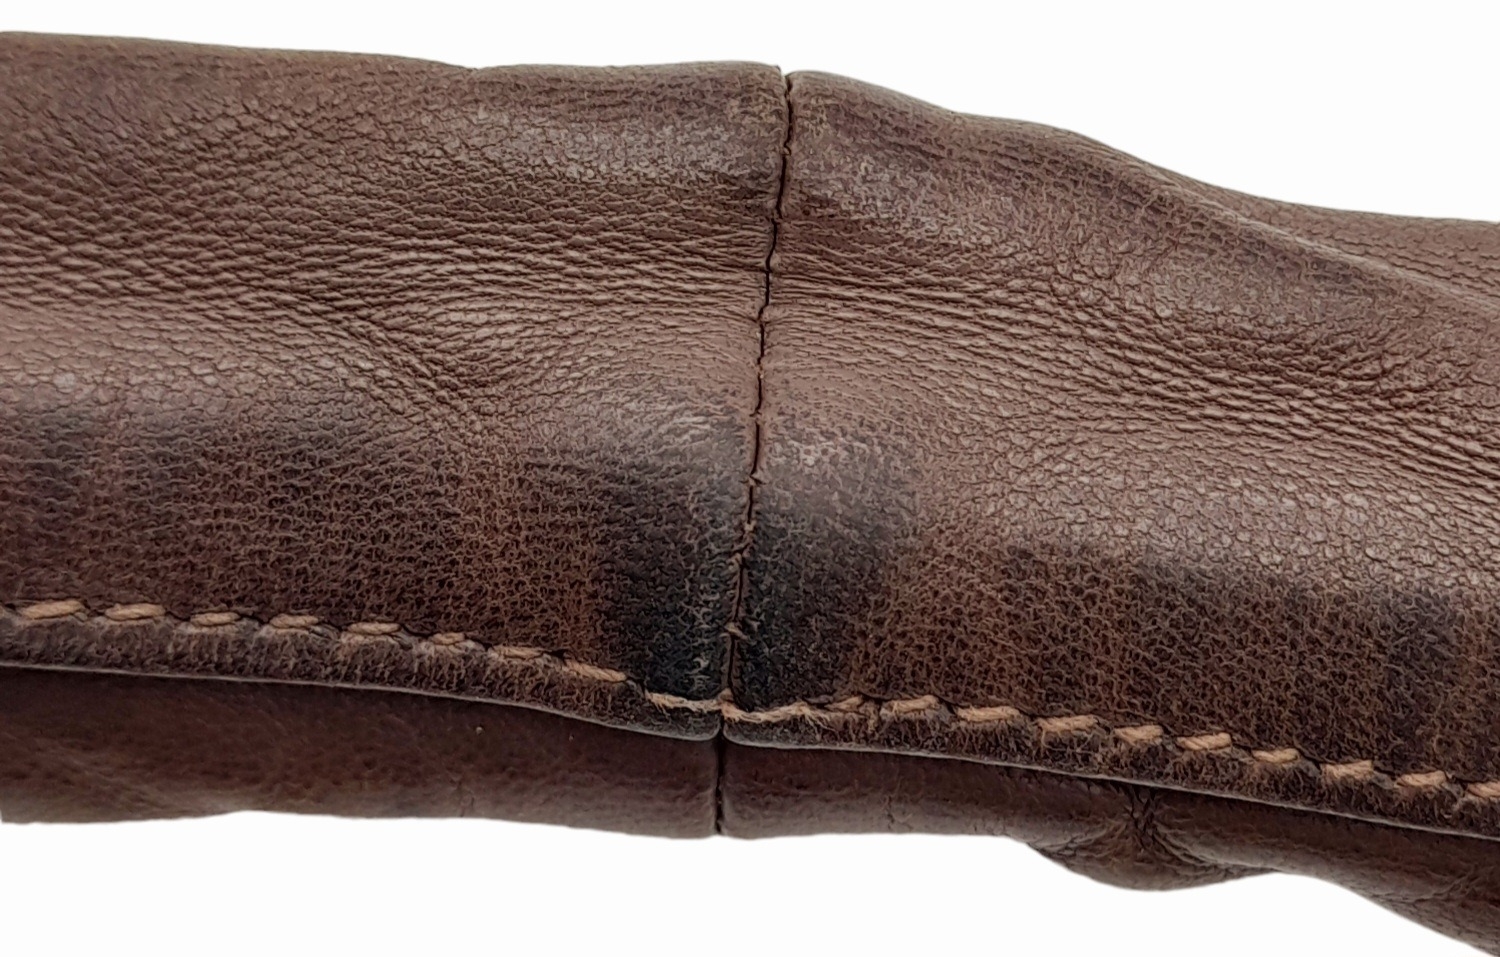 A Bottega Veneta Brown Bag. Intrecciato leather exterior with gold-toned hardware, single handle/ - Image 4 of 8